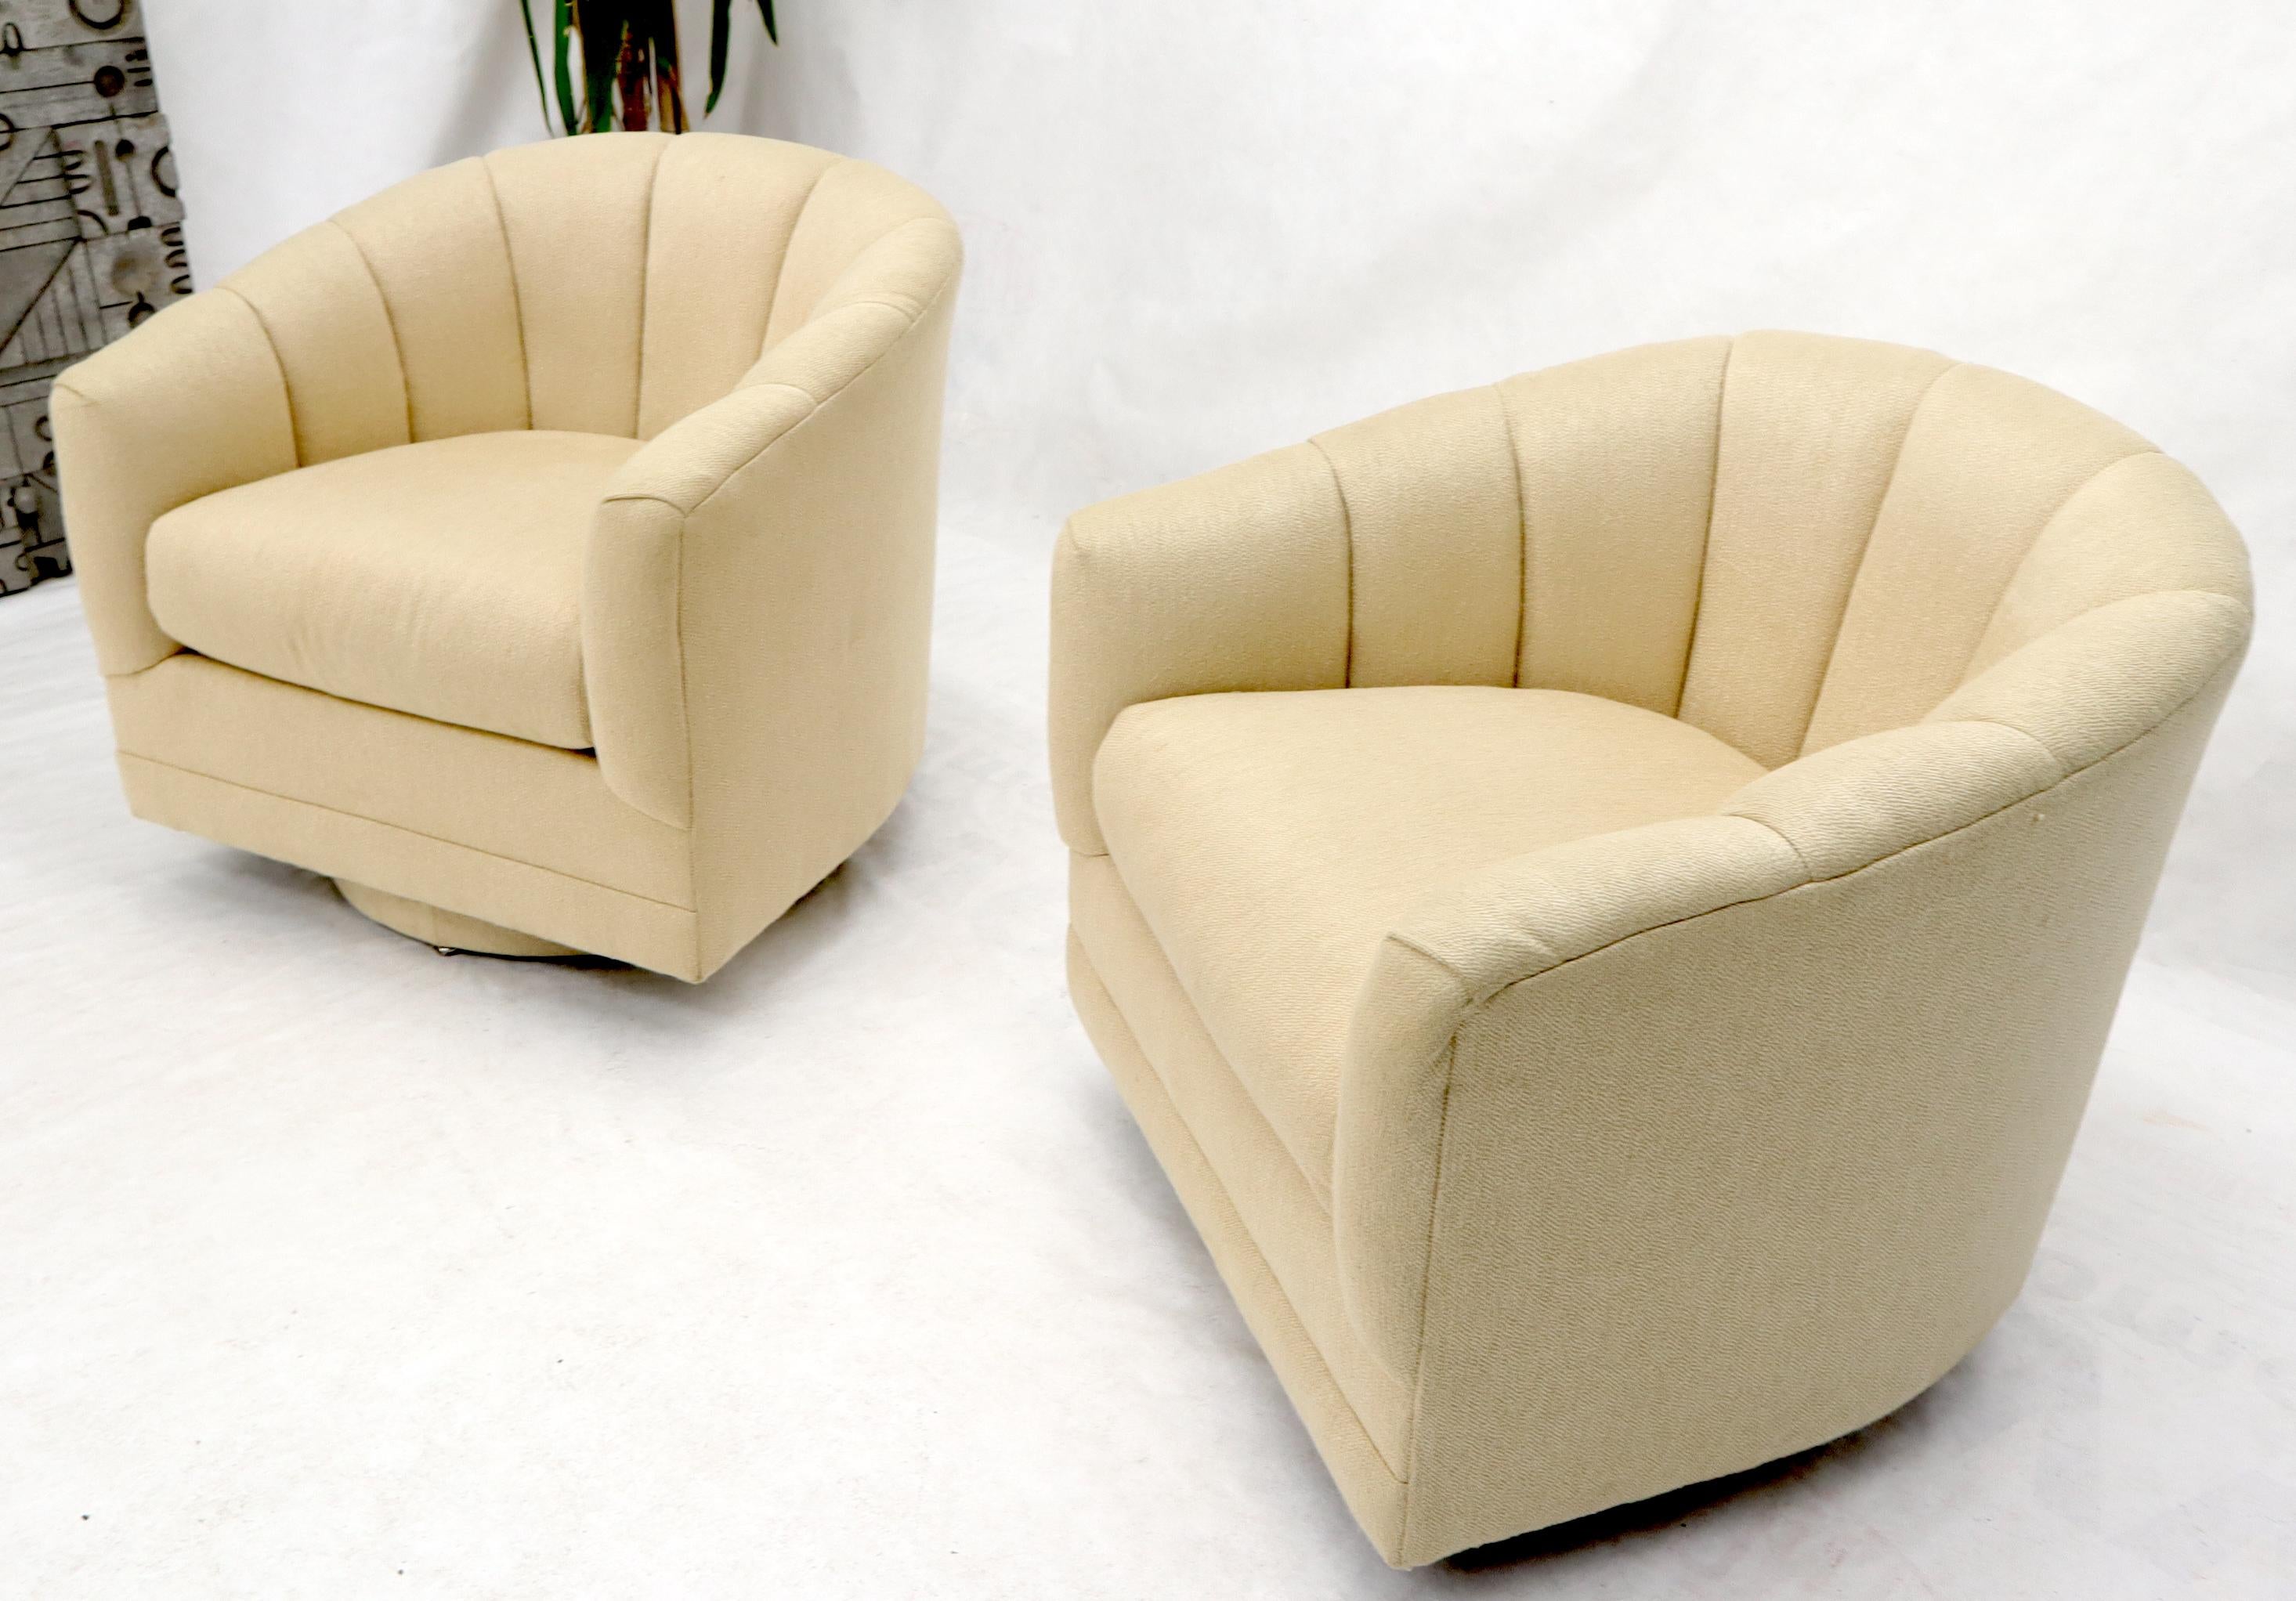 Pair of Mid-Century Modern barrel back scallop upholstery swivel lounge chairs Milo Baughman design.